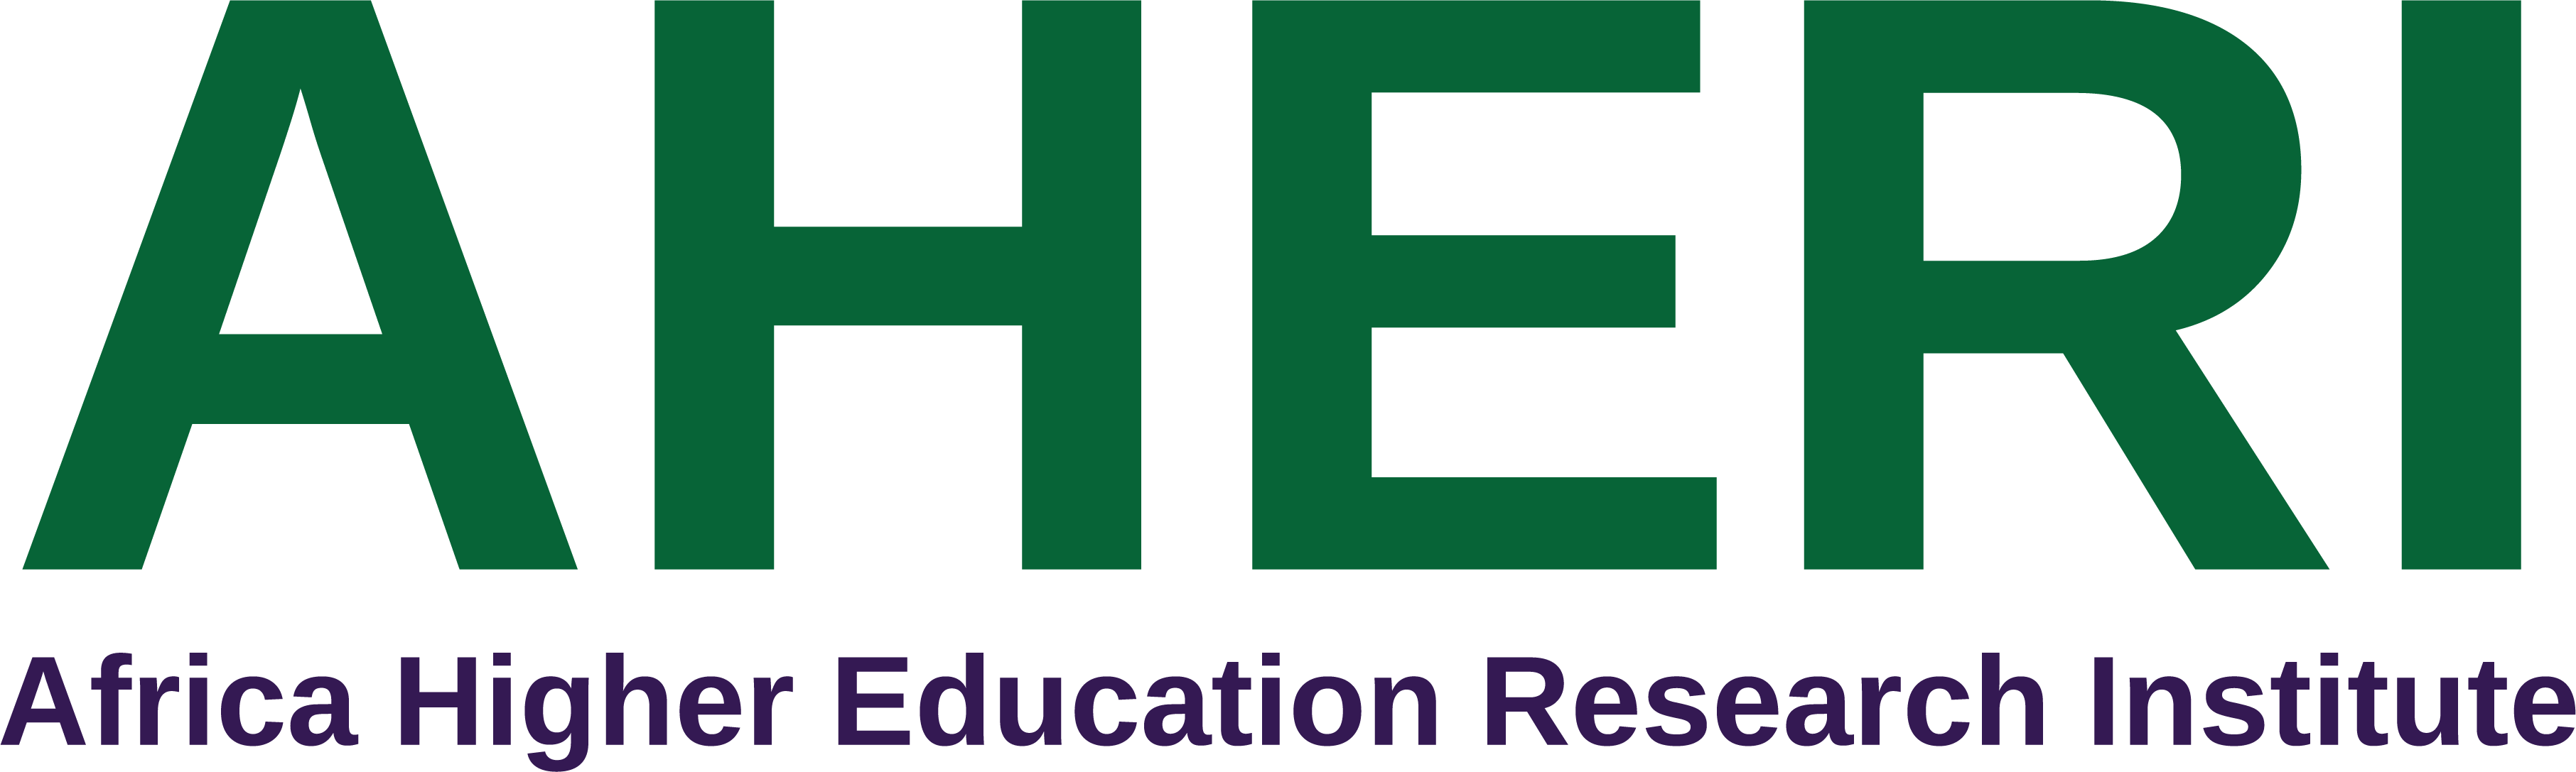 Africa Higher Education Research Institute (AHERI)